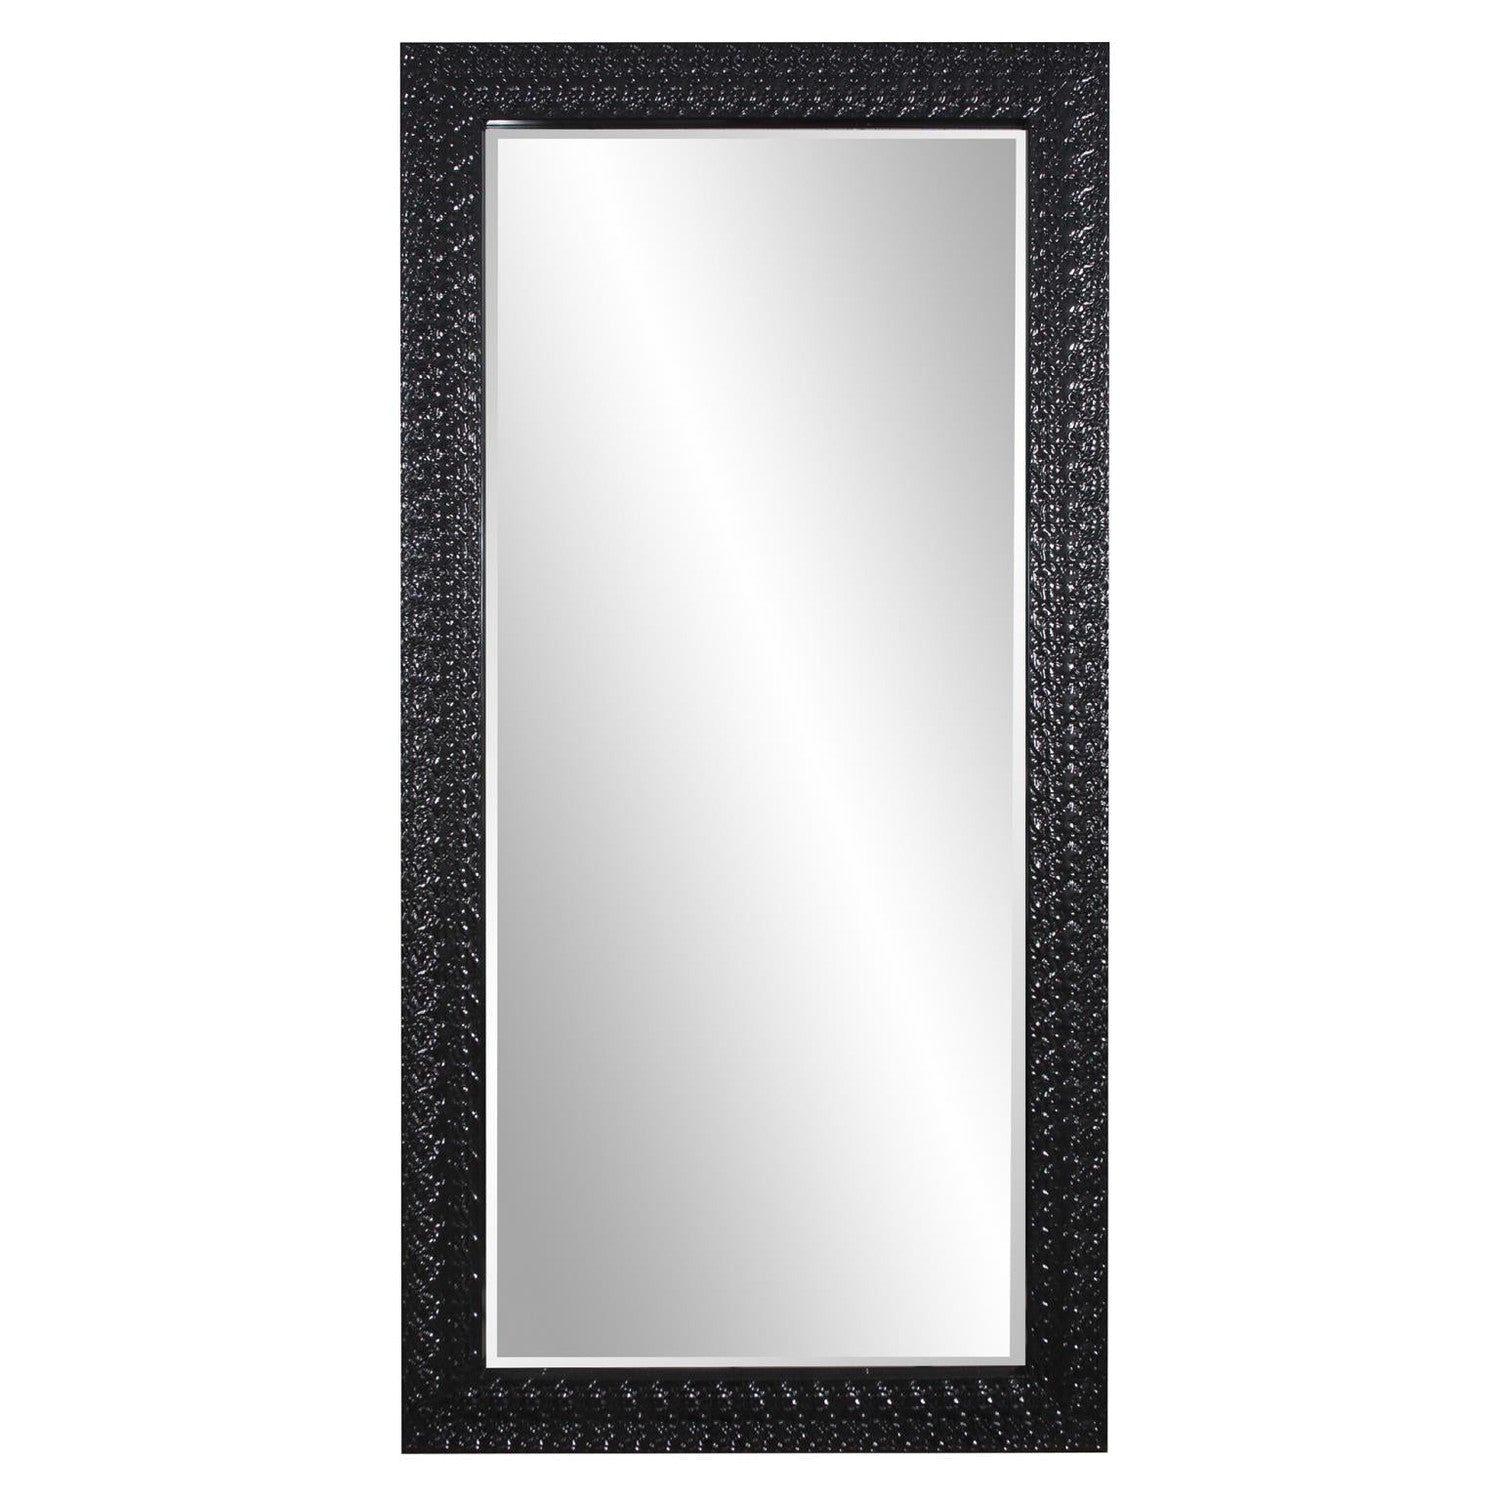 Maximus Mirror-The Howard Elliott Collection-HOWARD-60030-Mirrors-1-France and Son